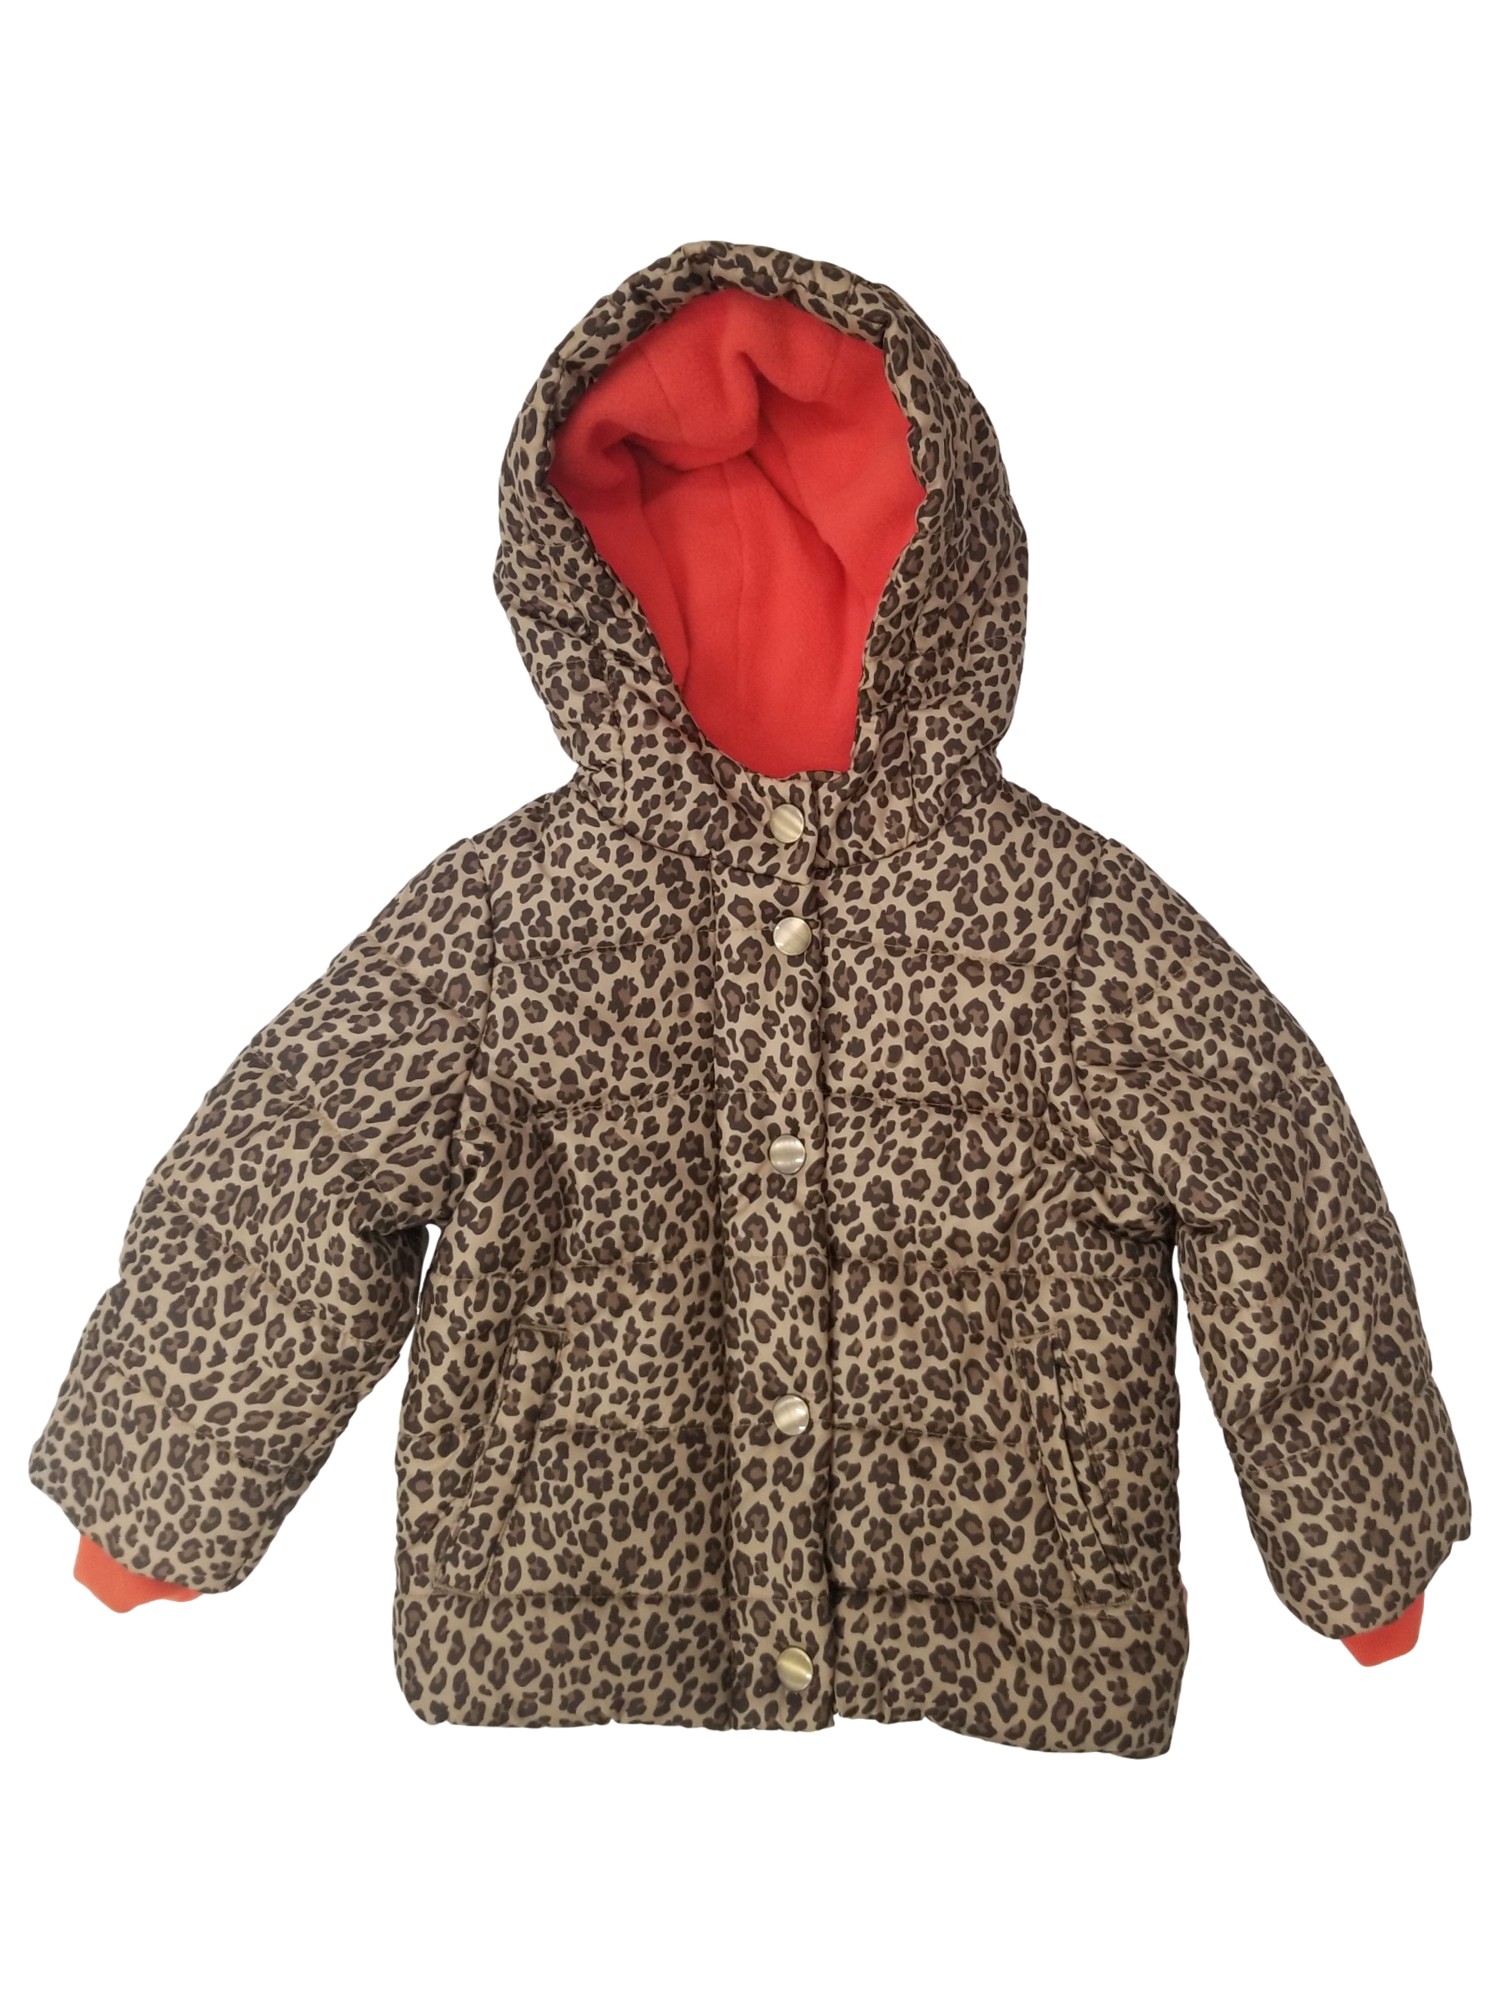 Carter's Healthtex Infant Girls Leopard Print Orange Snow Coat Hood Baby Ski Jacket 18m